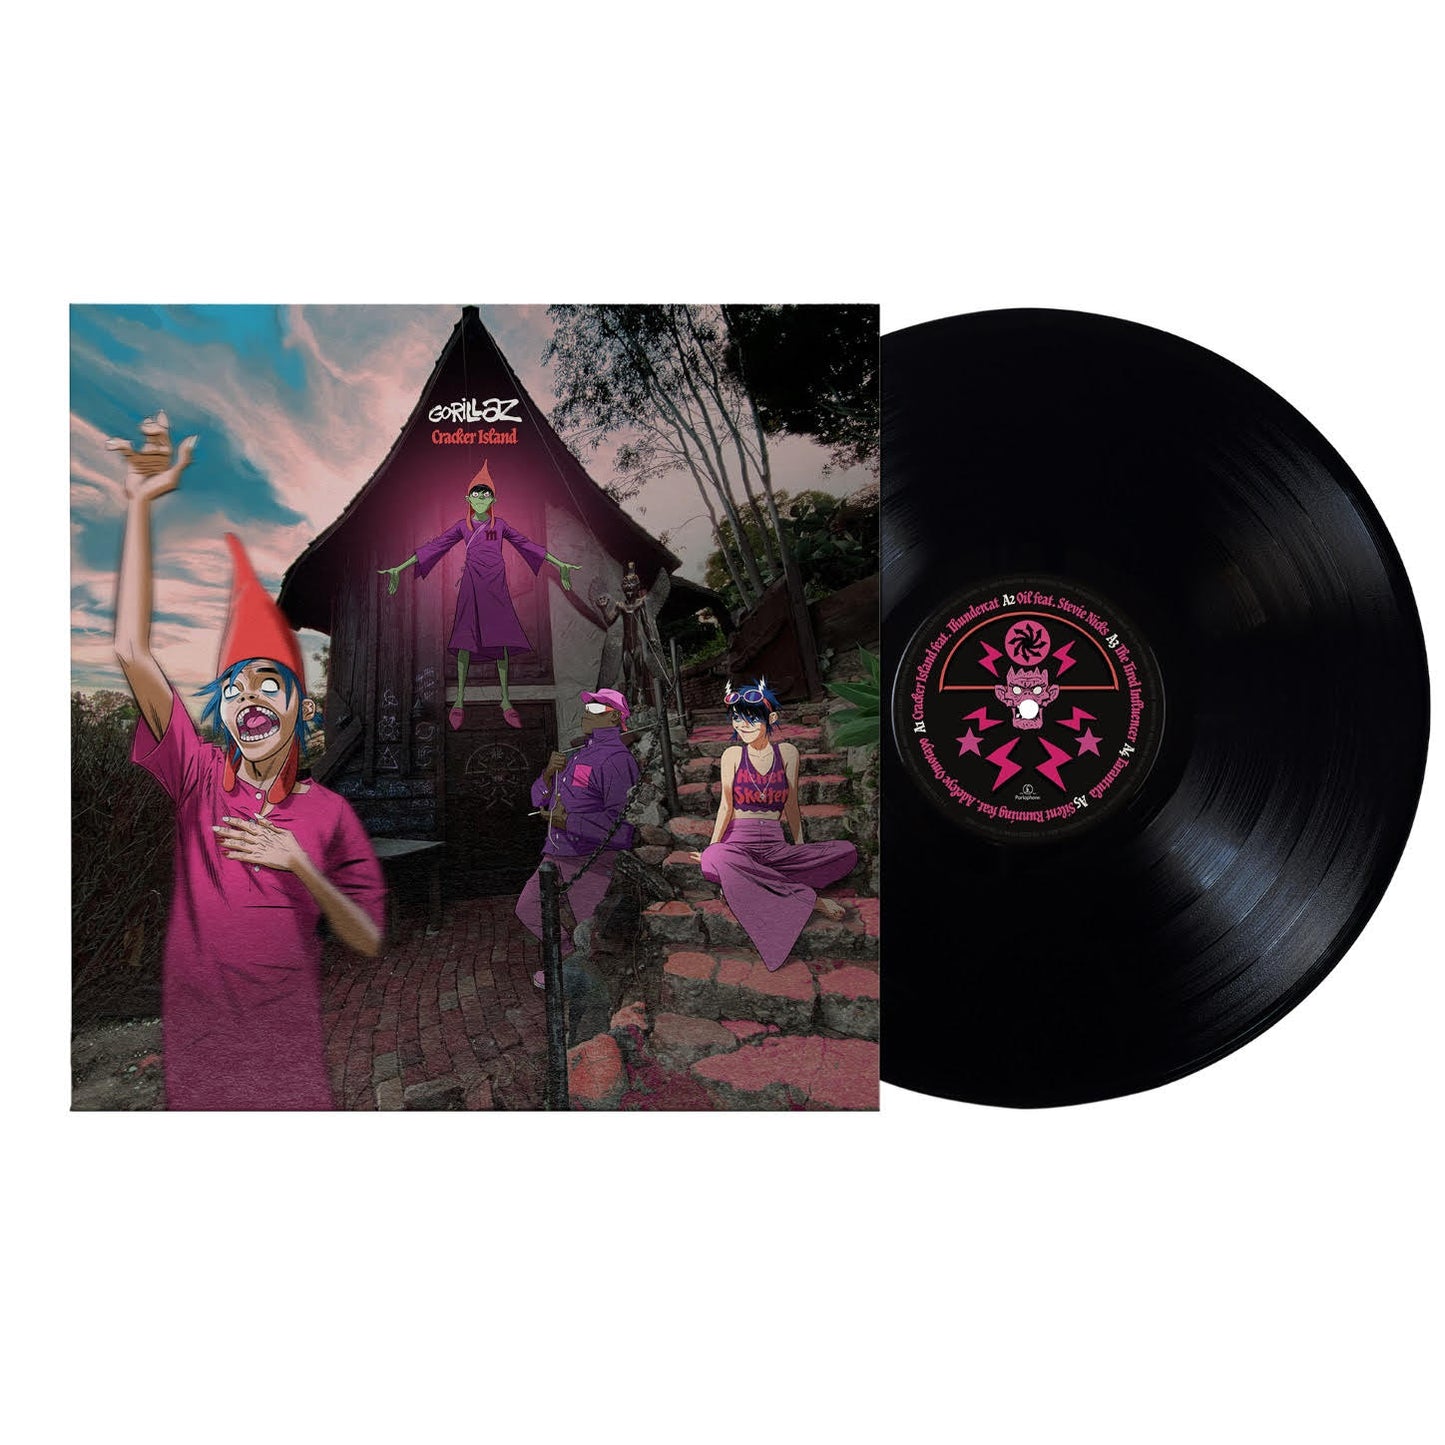 Gorillaz - Cracker Island | Buy on Vinyl LP